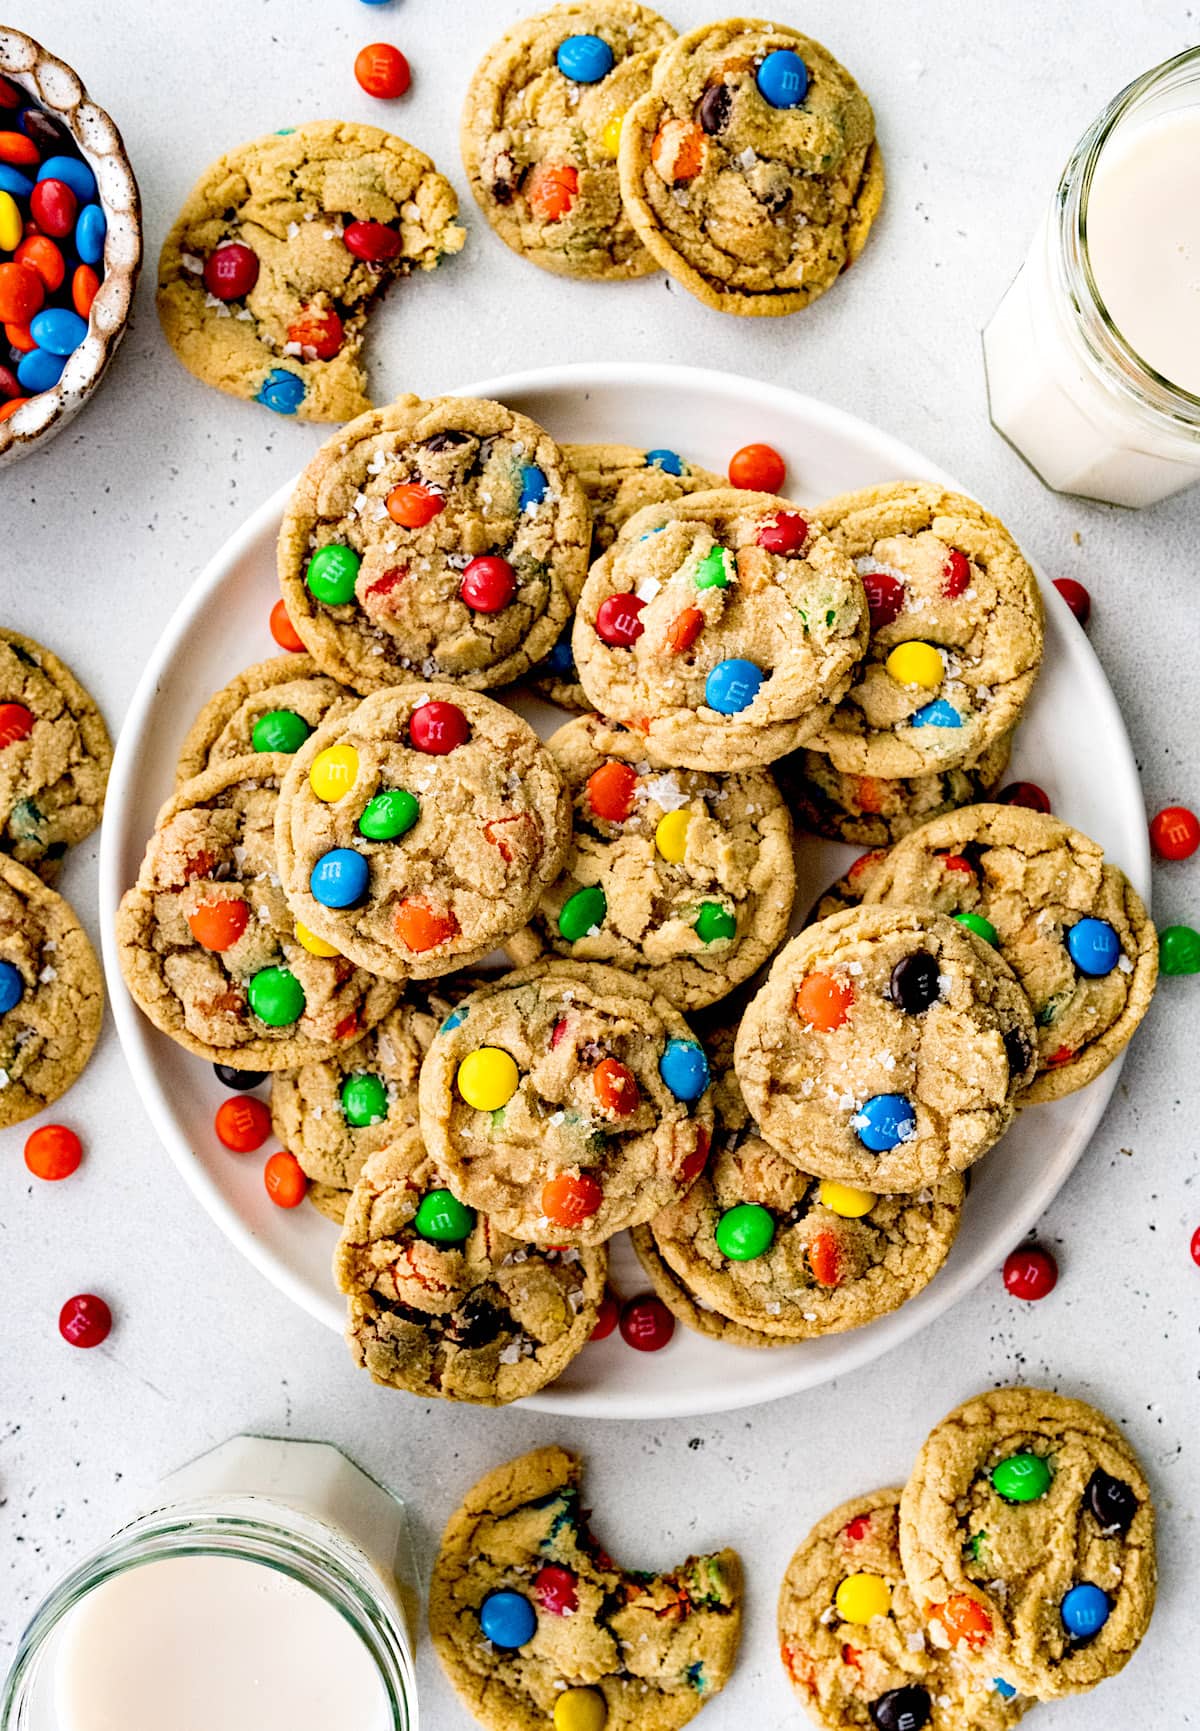 Mini M&M Cookies - Stephanie's Sweet Treats